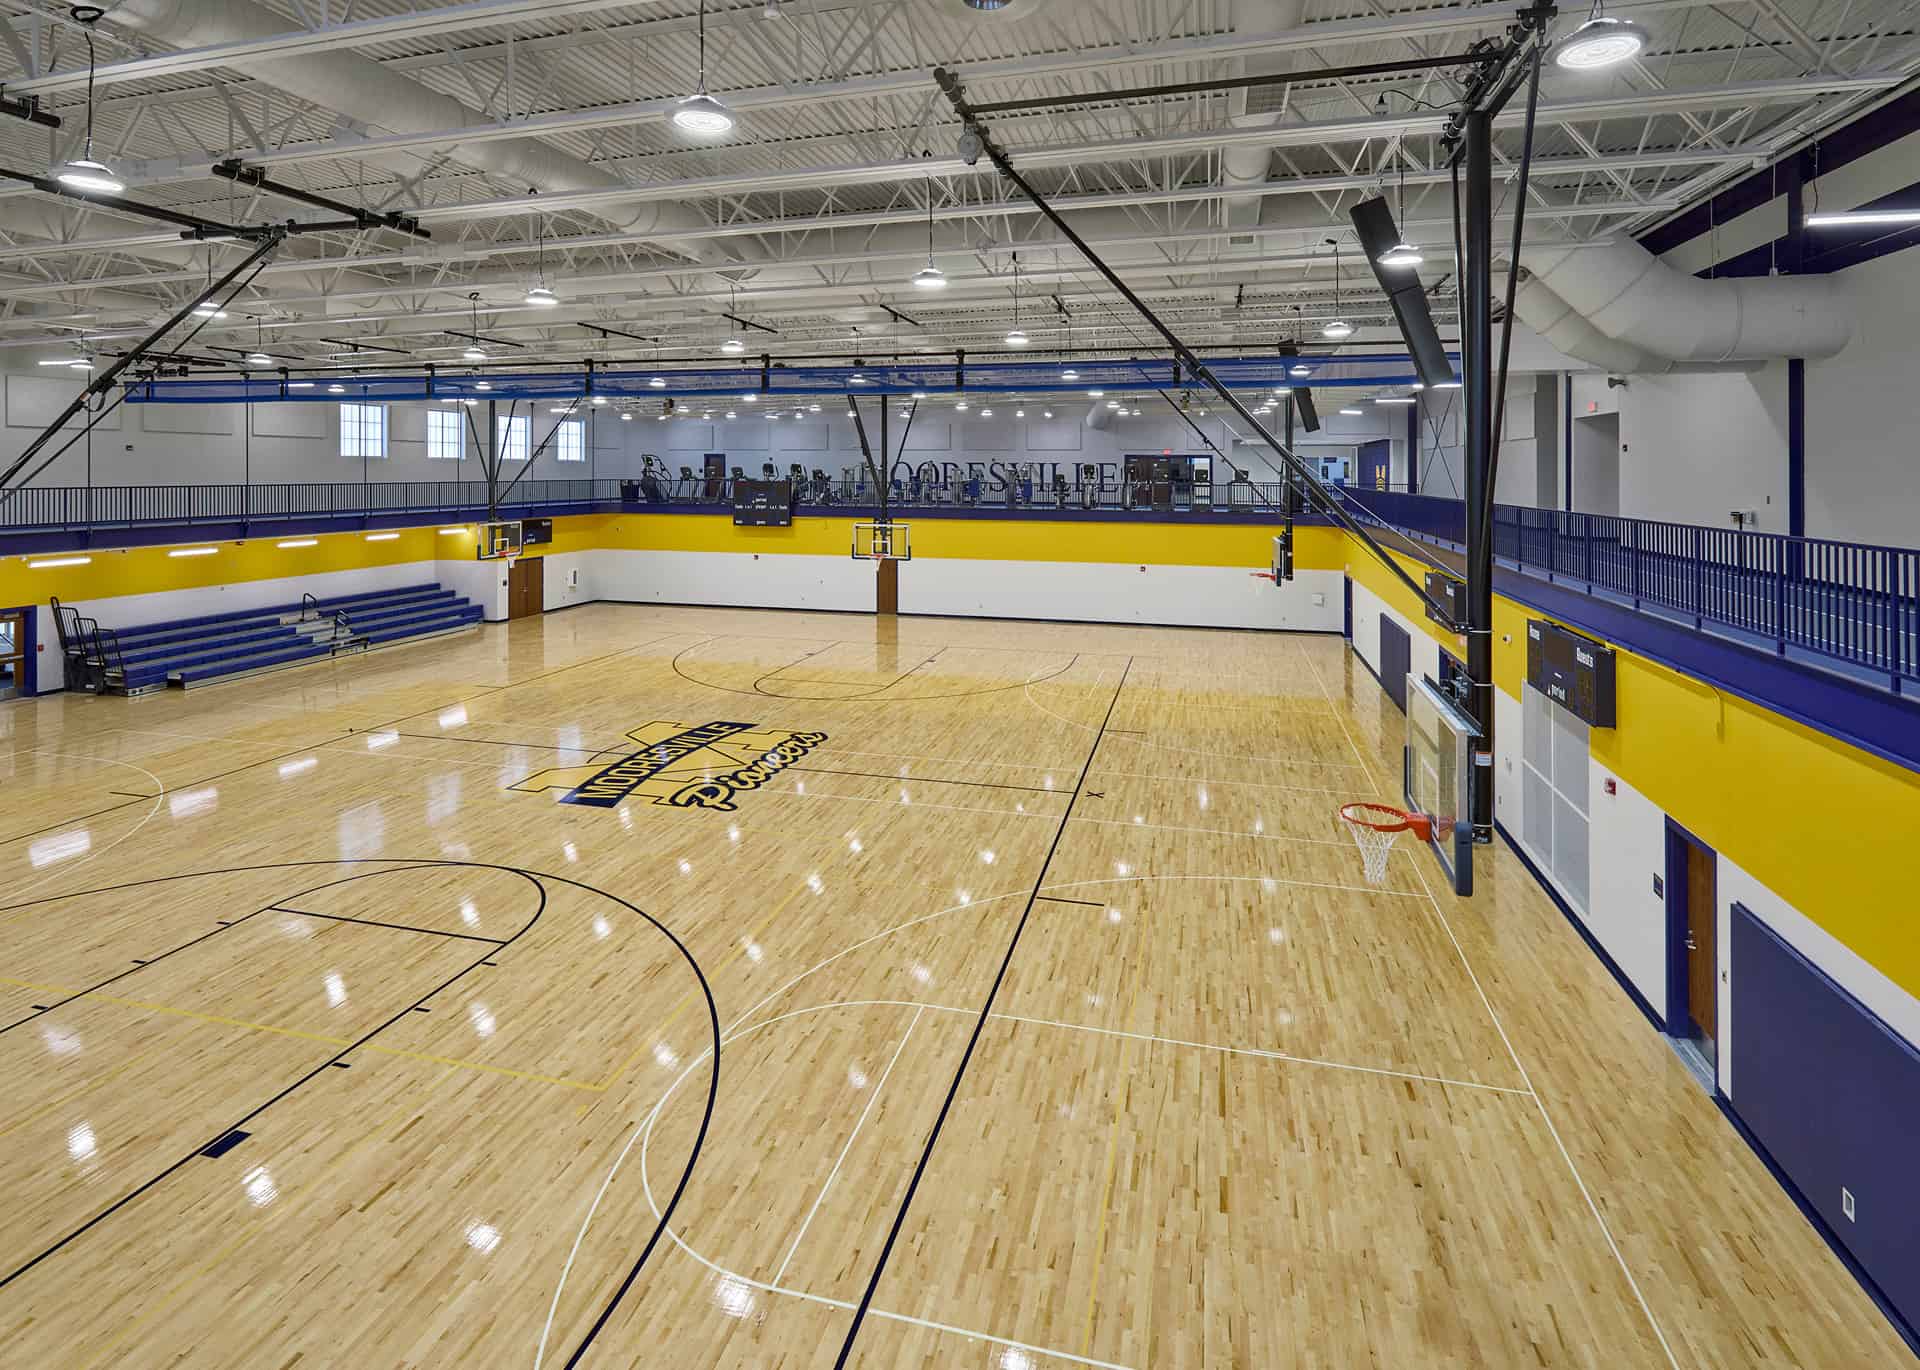 New Mooresville High School Pioneer Pavilion Gymnasium with upper Running Track